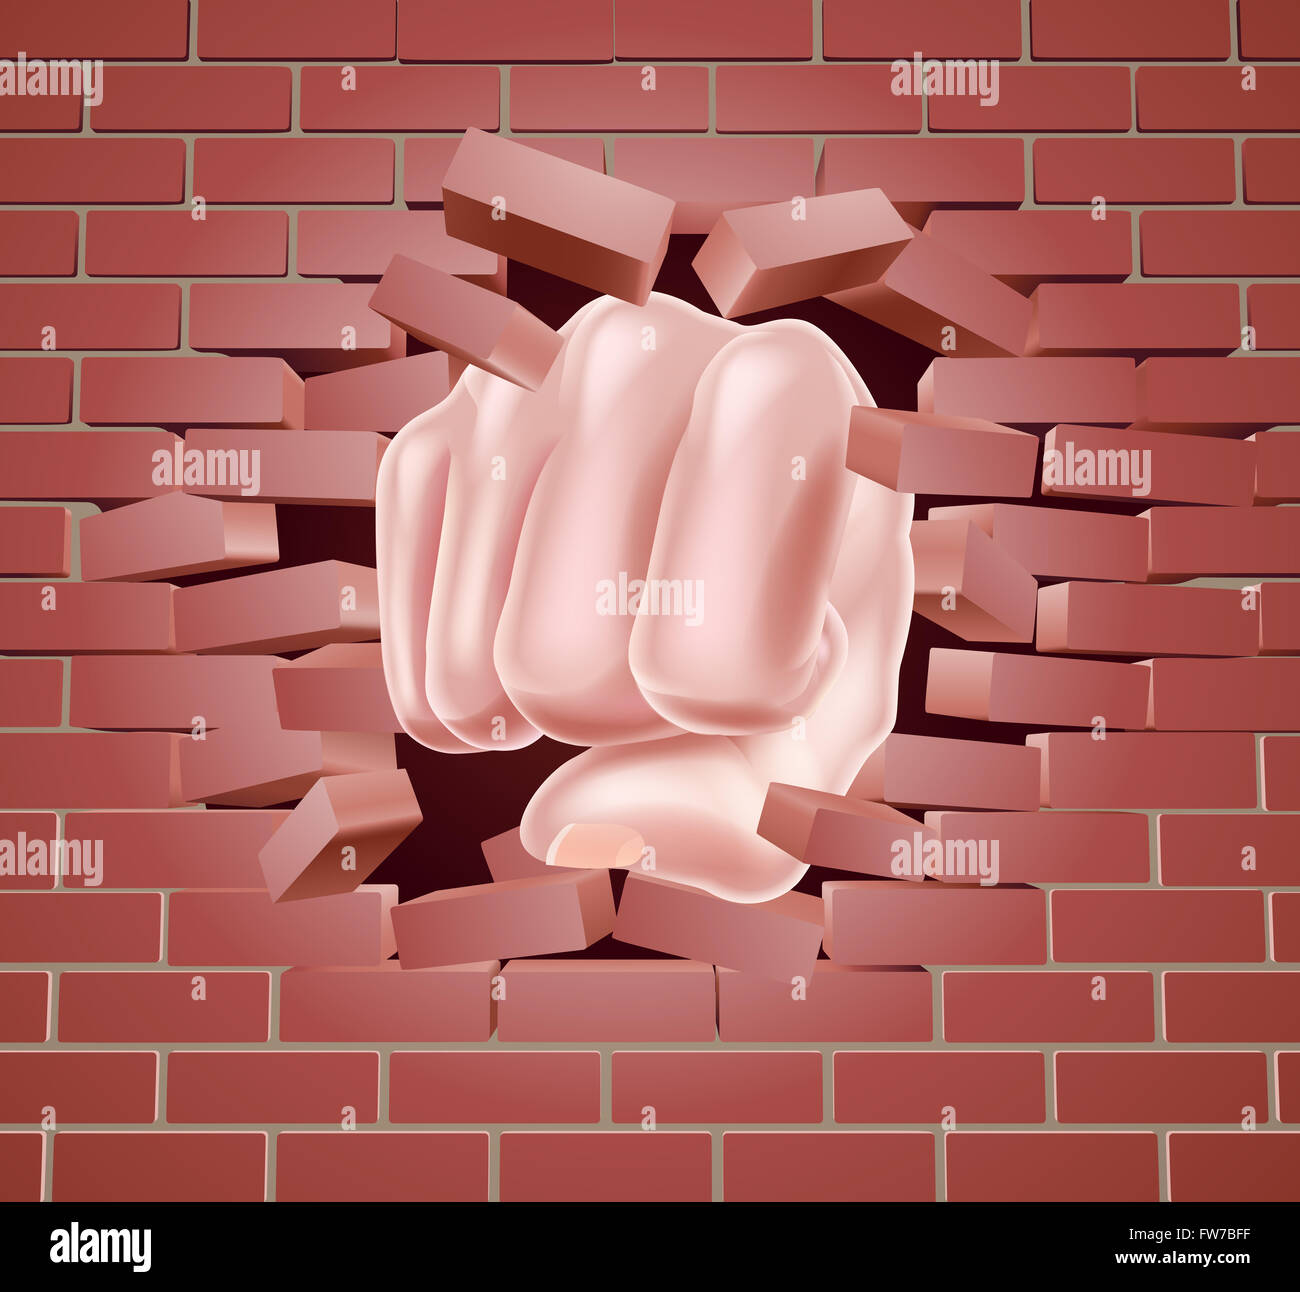 Fist breaking through a brick wall Stock Photo